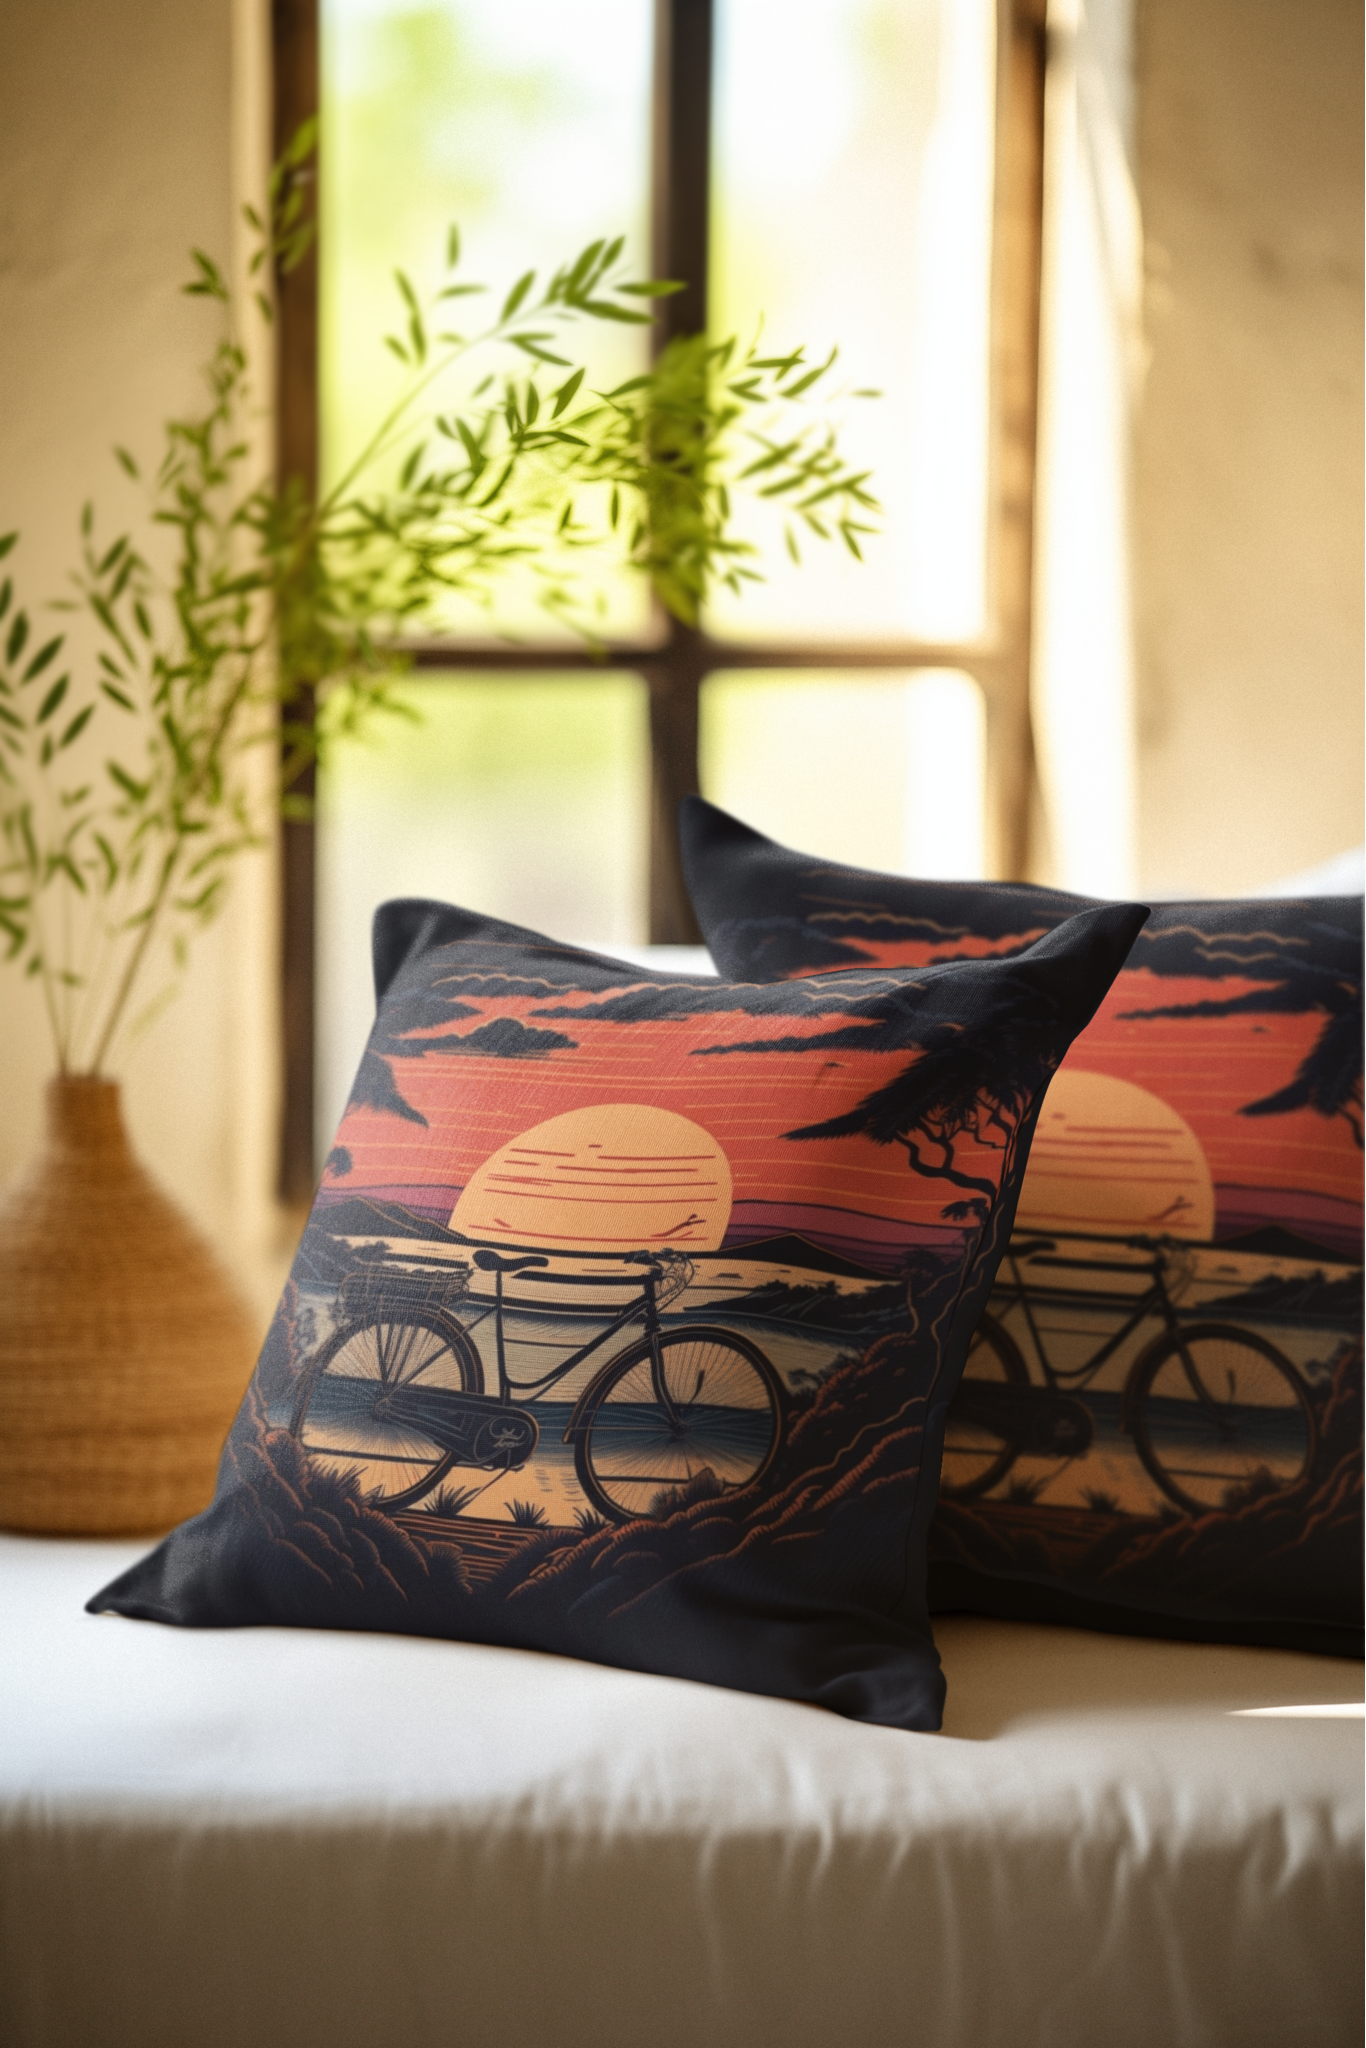 Sunset Horizon Cushion Cover - Printed